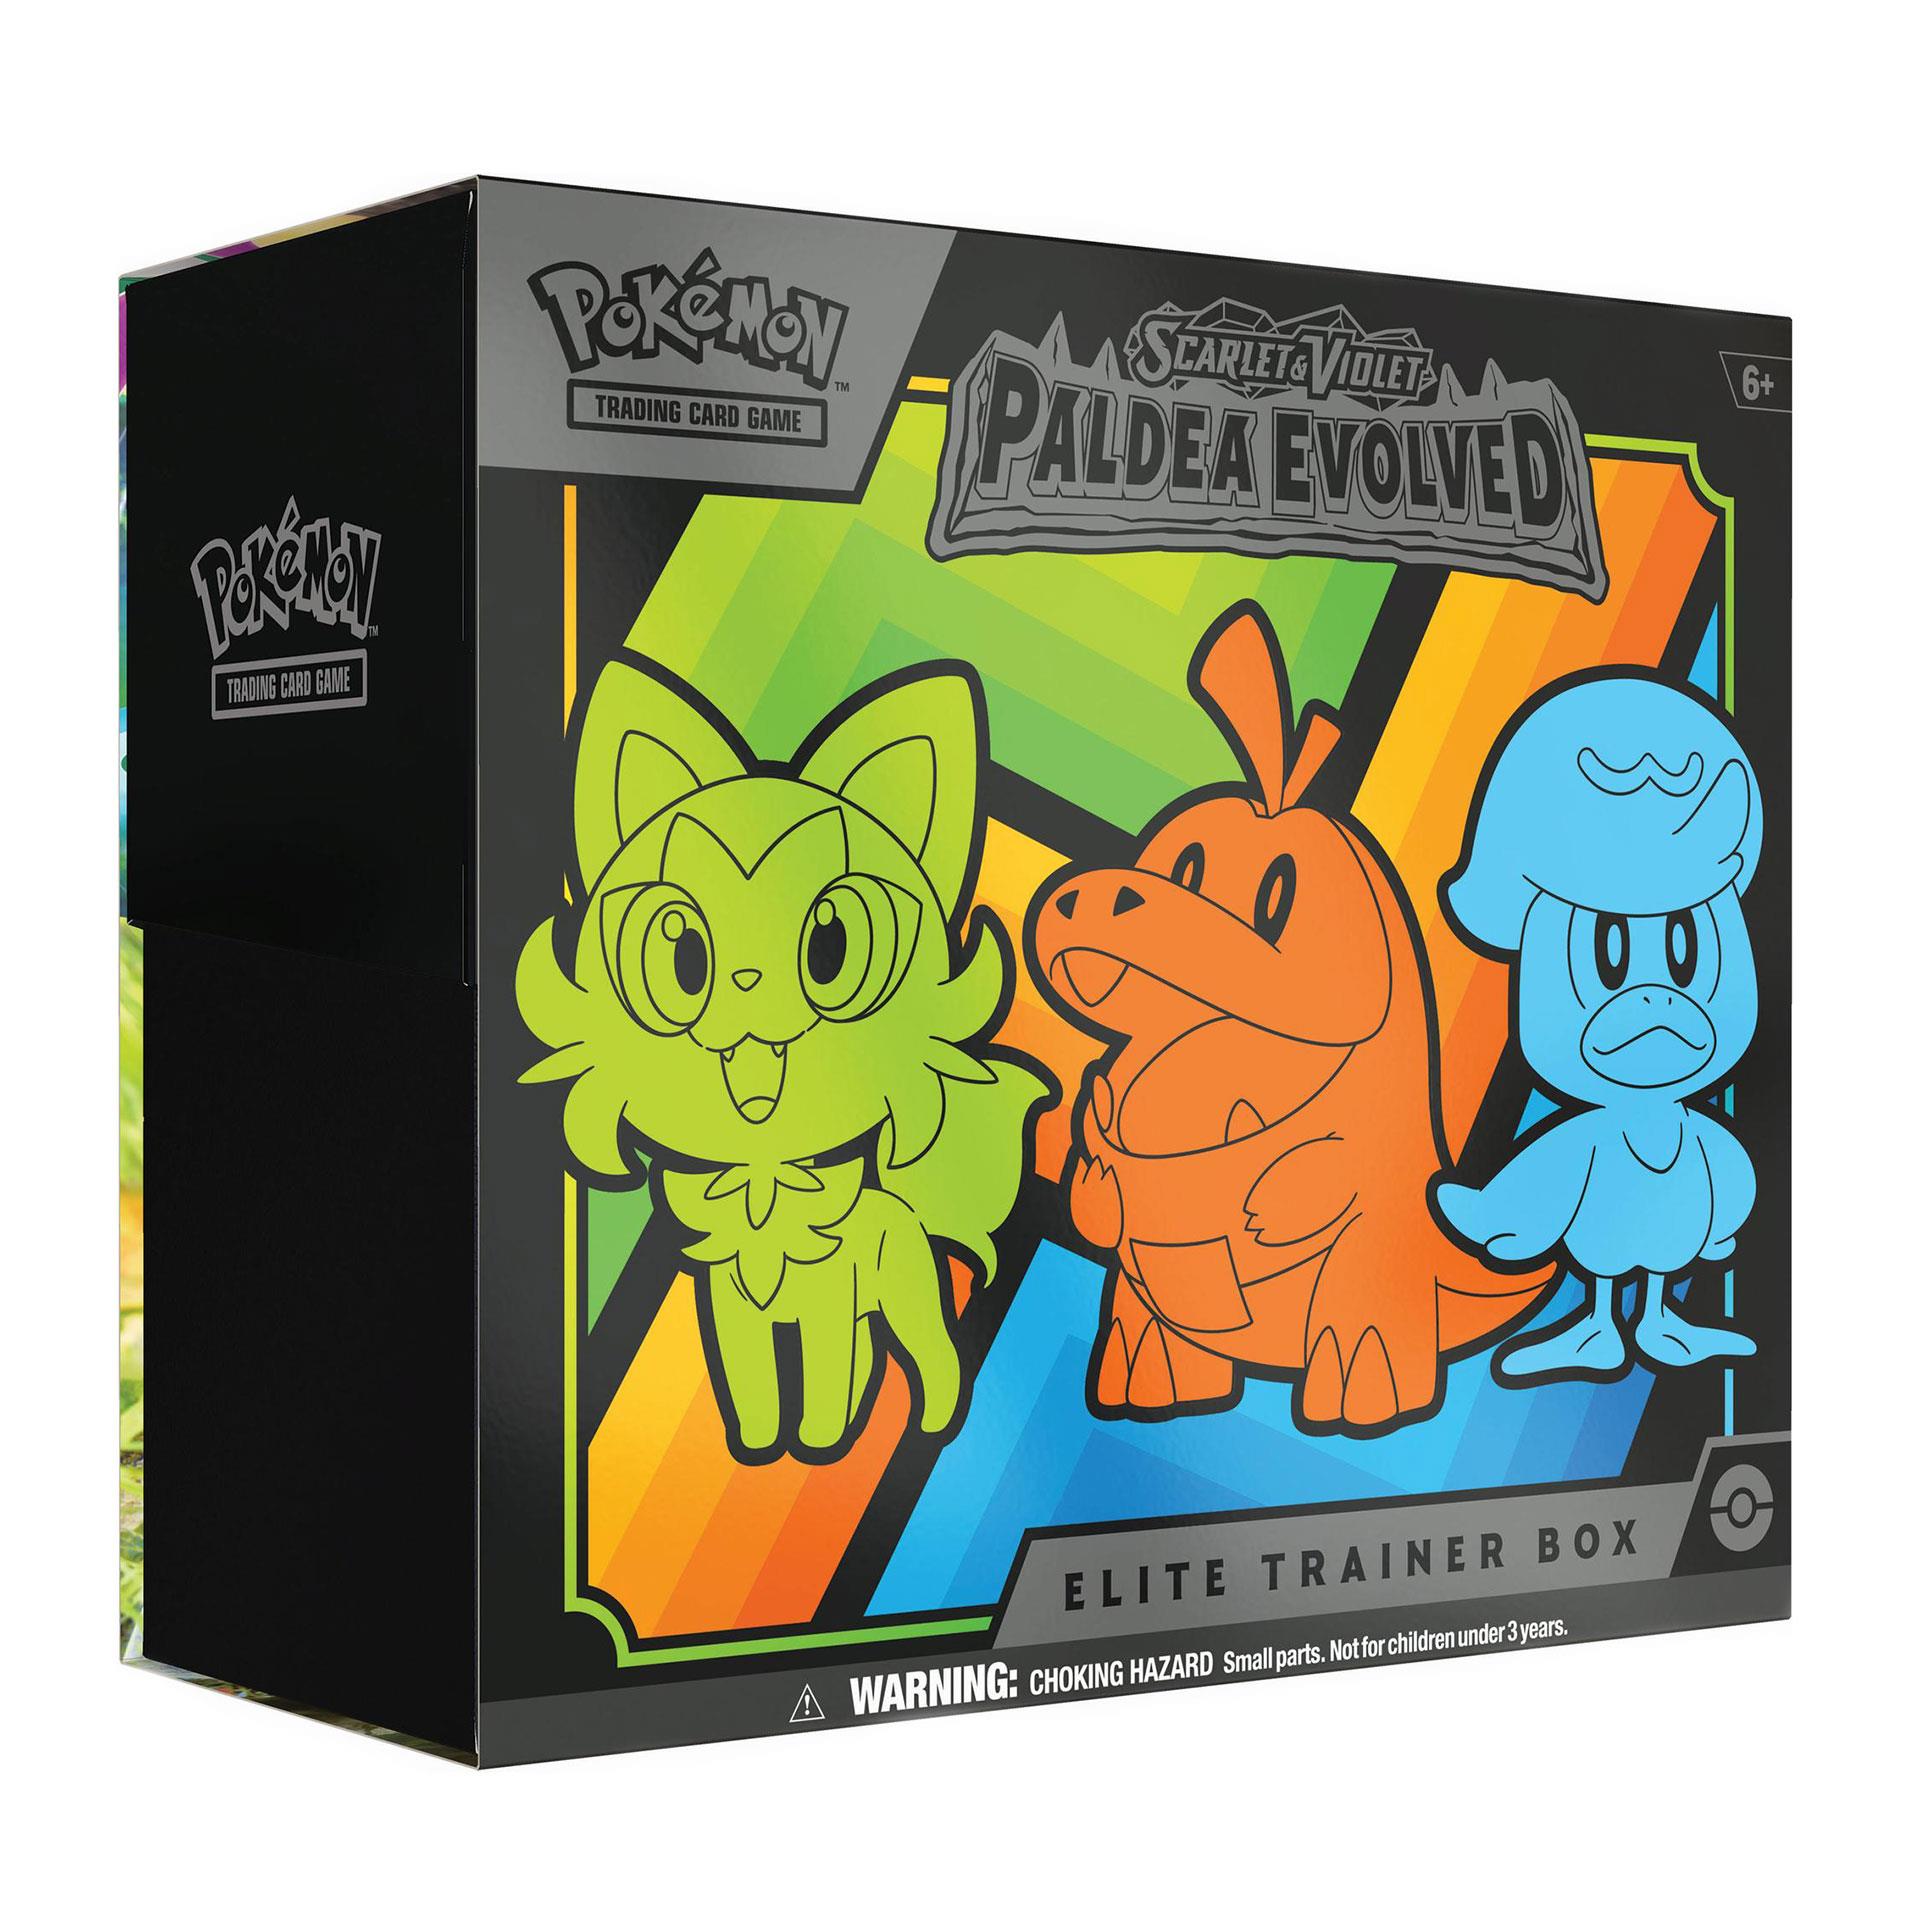 Pokémon Paldea Evolved – Elite Trainer Box